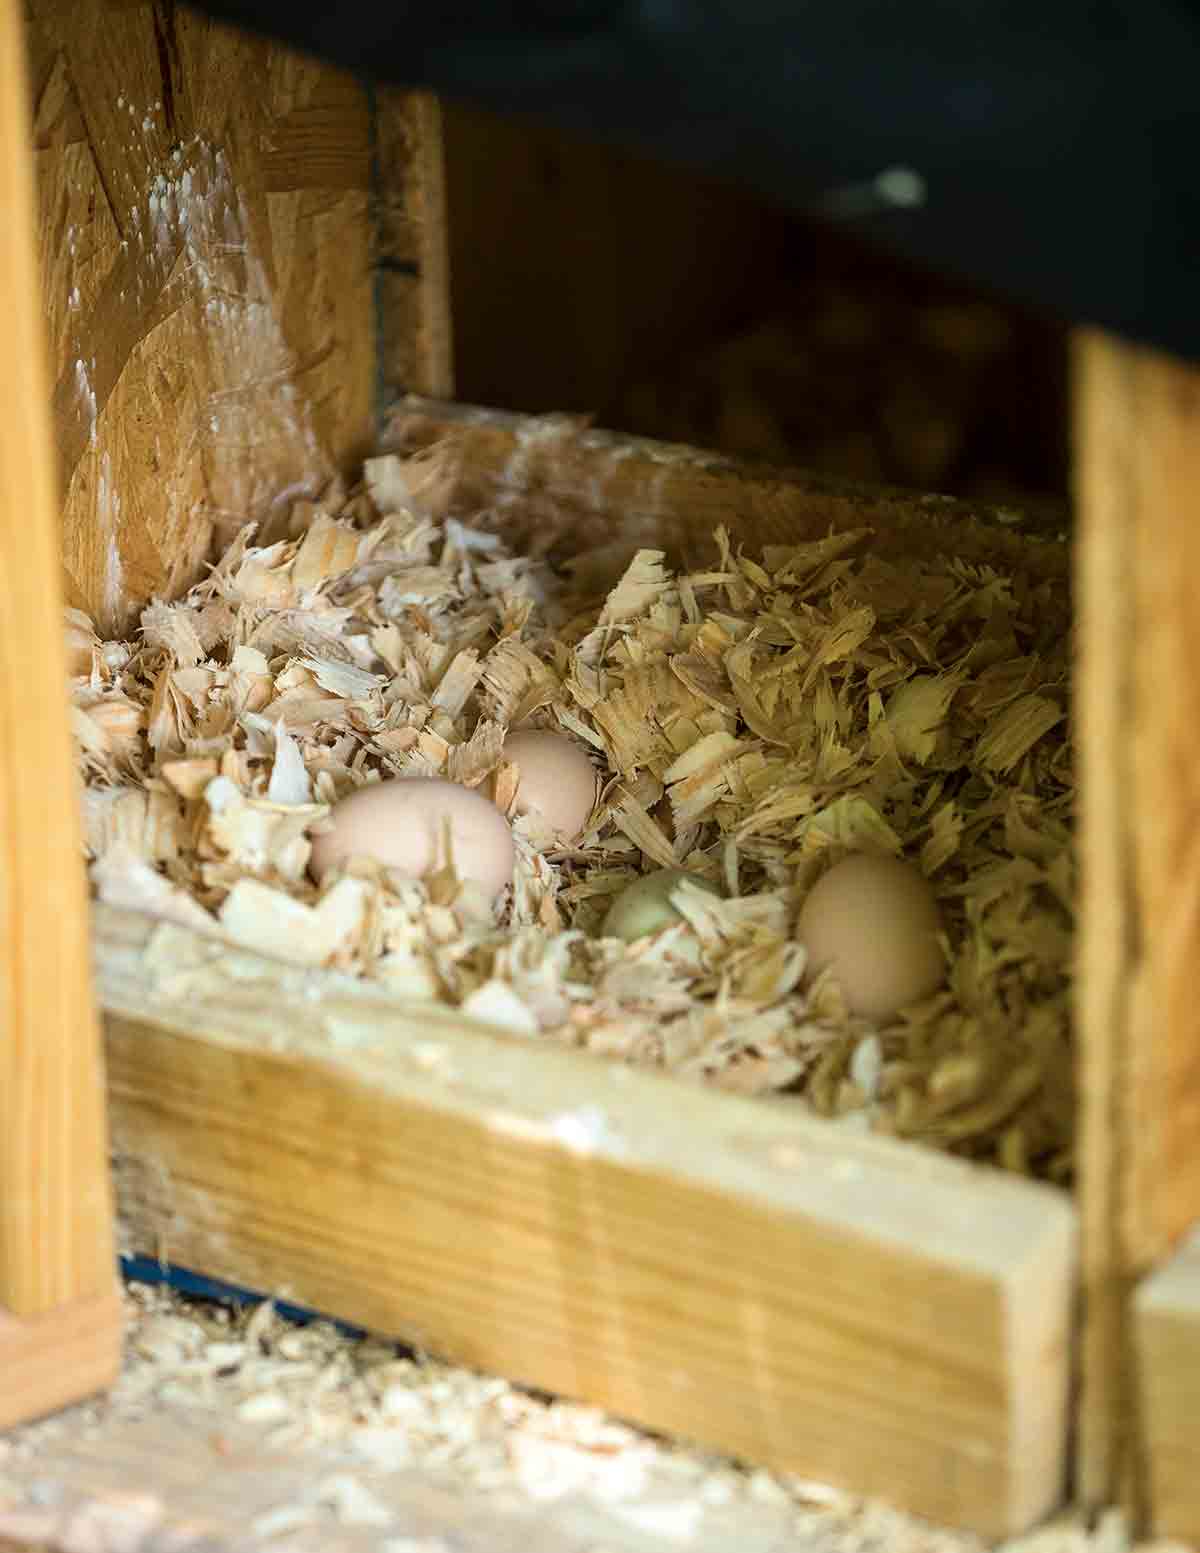 Chicken eggs in wood shavings in a wooden box